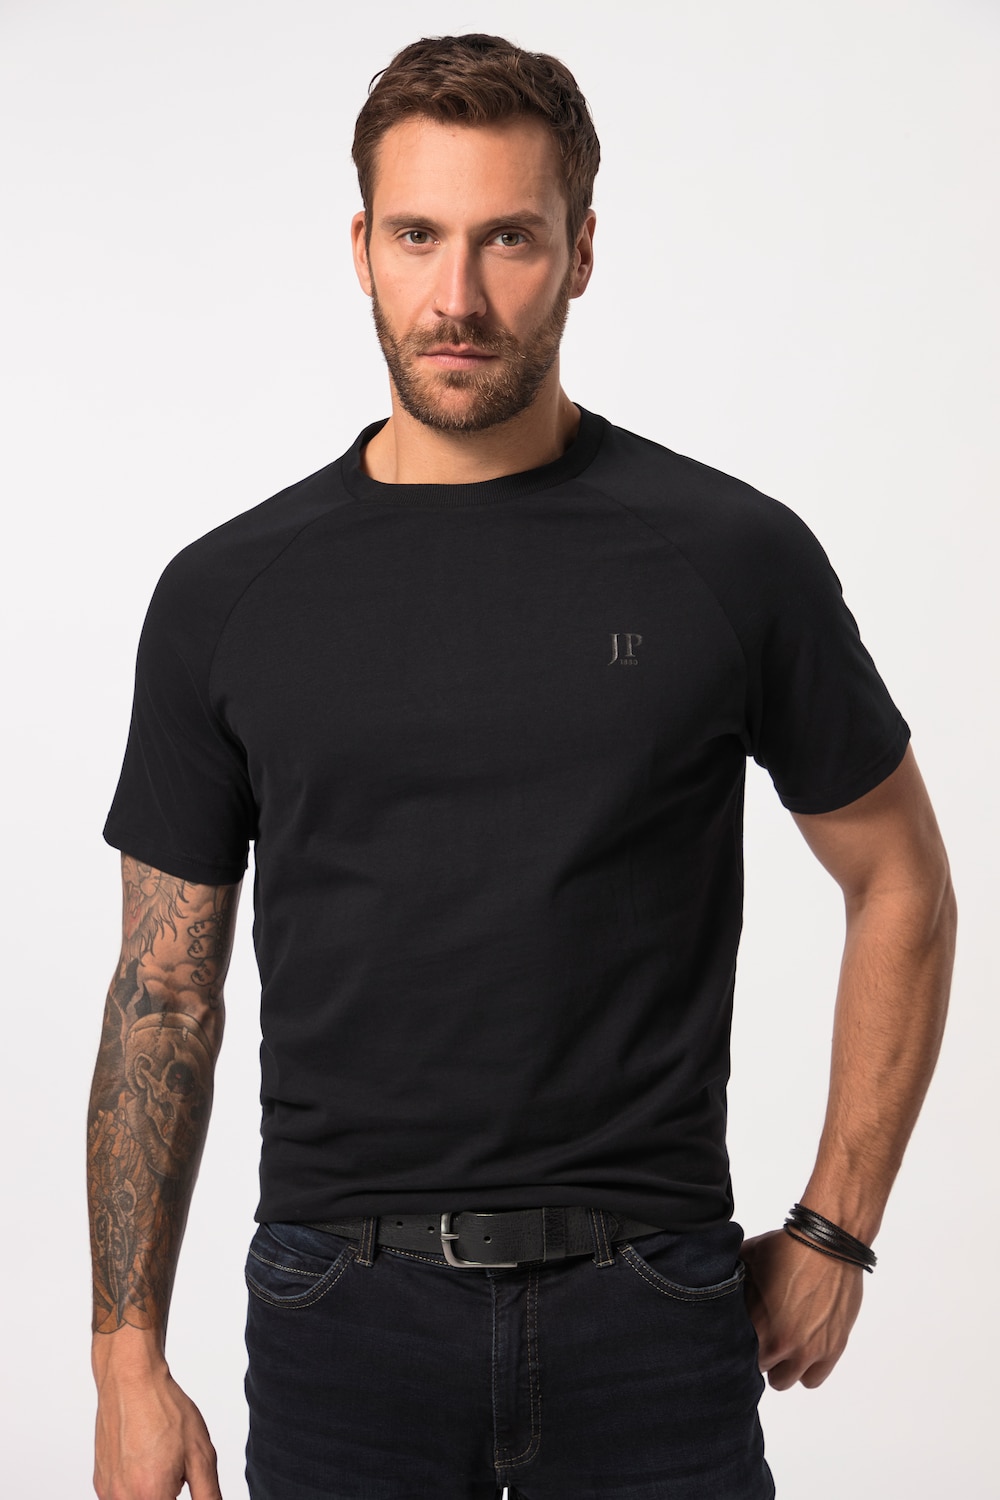 Grote Maten T-shirt, Heren, zwart, Maat: 3XL, Katoen, JP1880